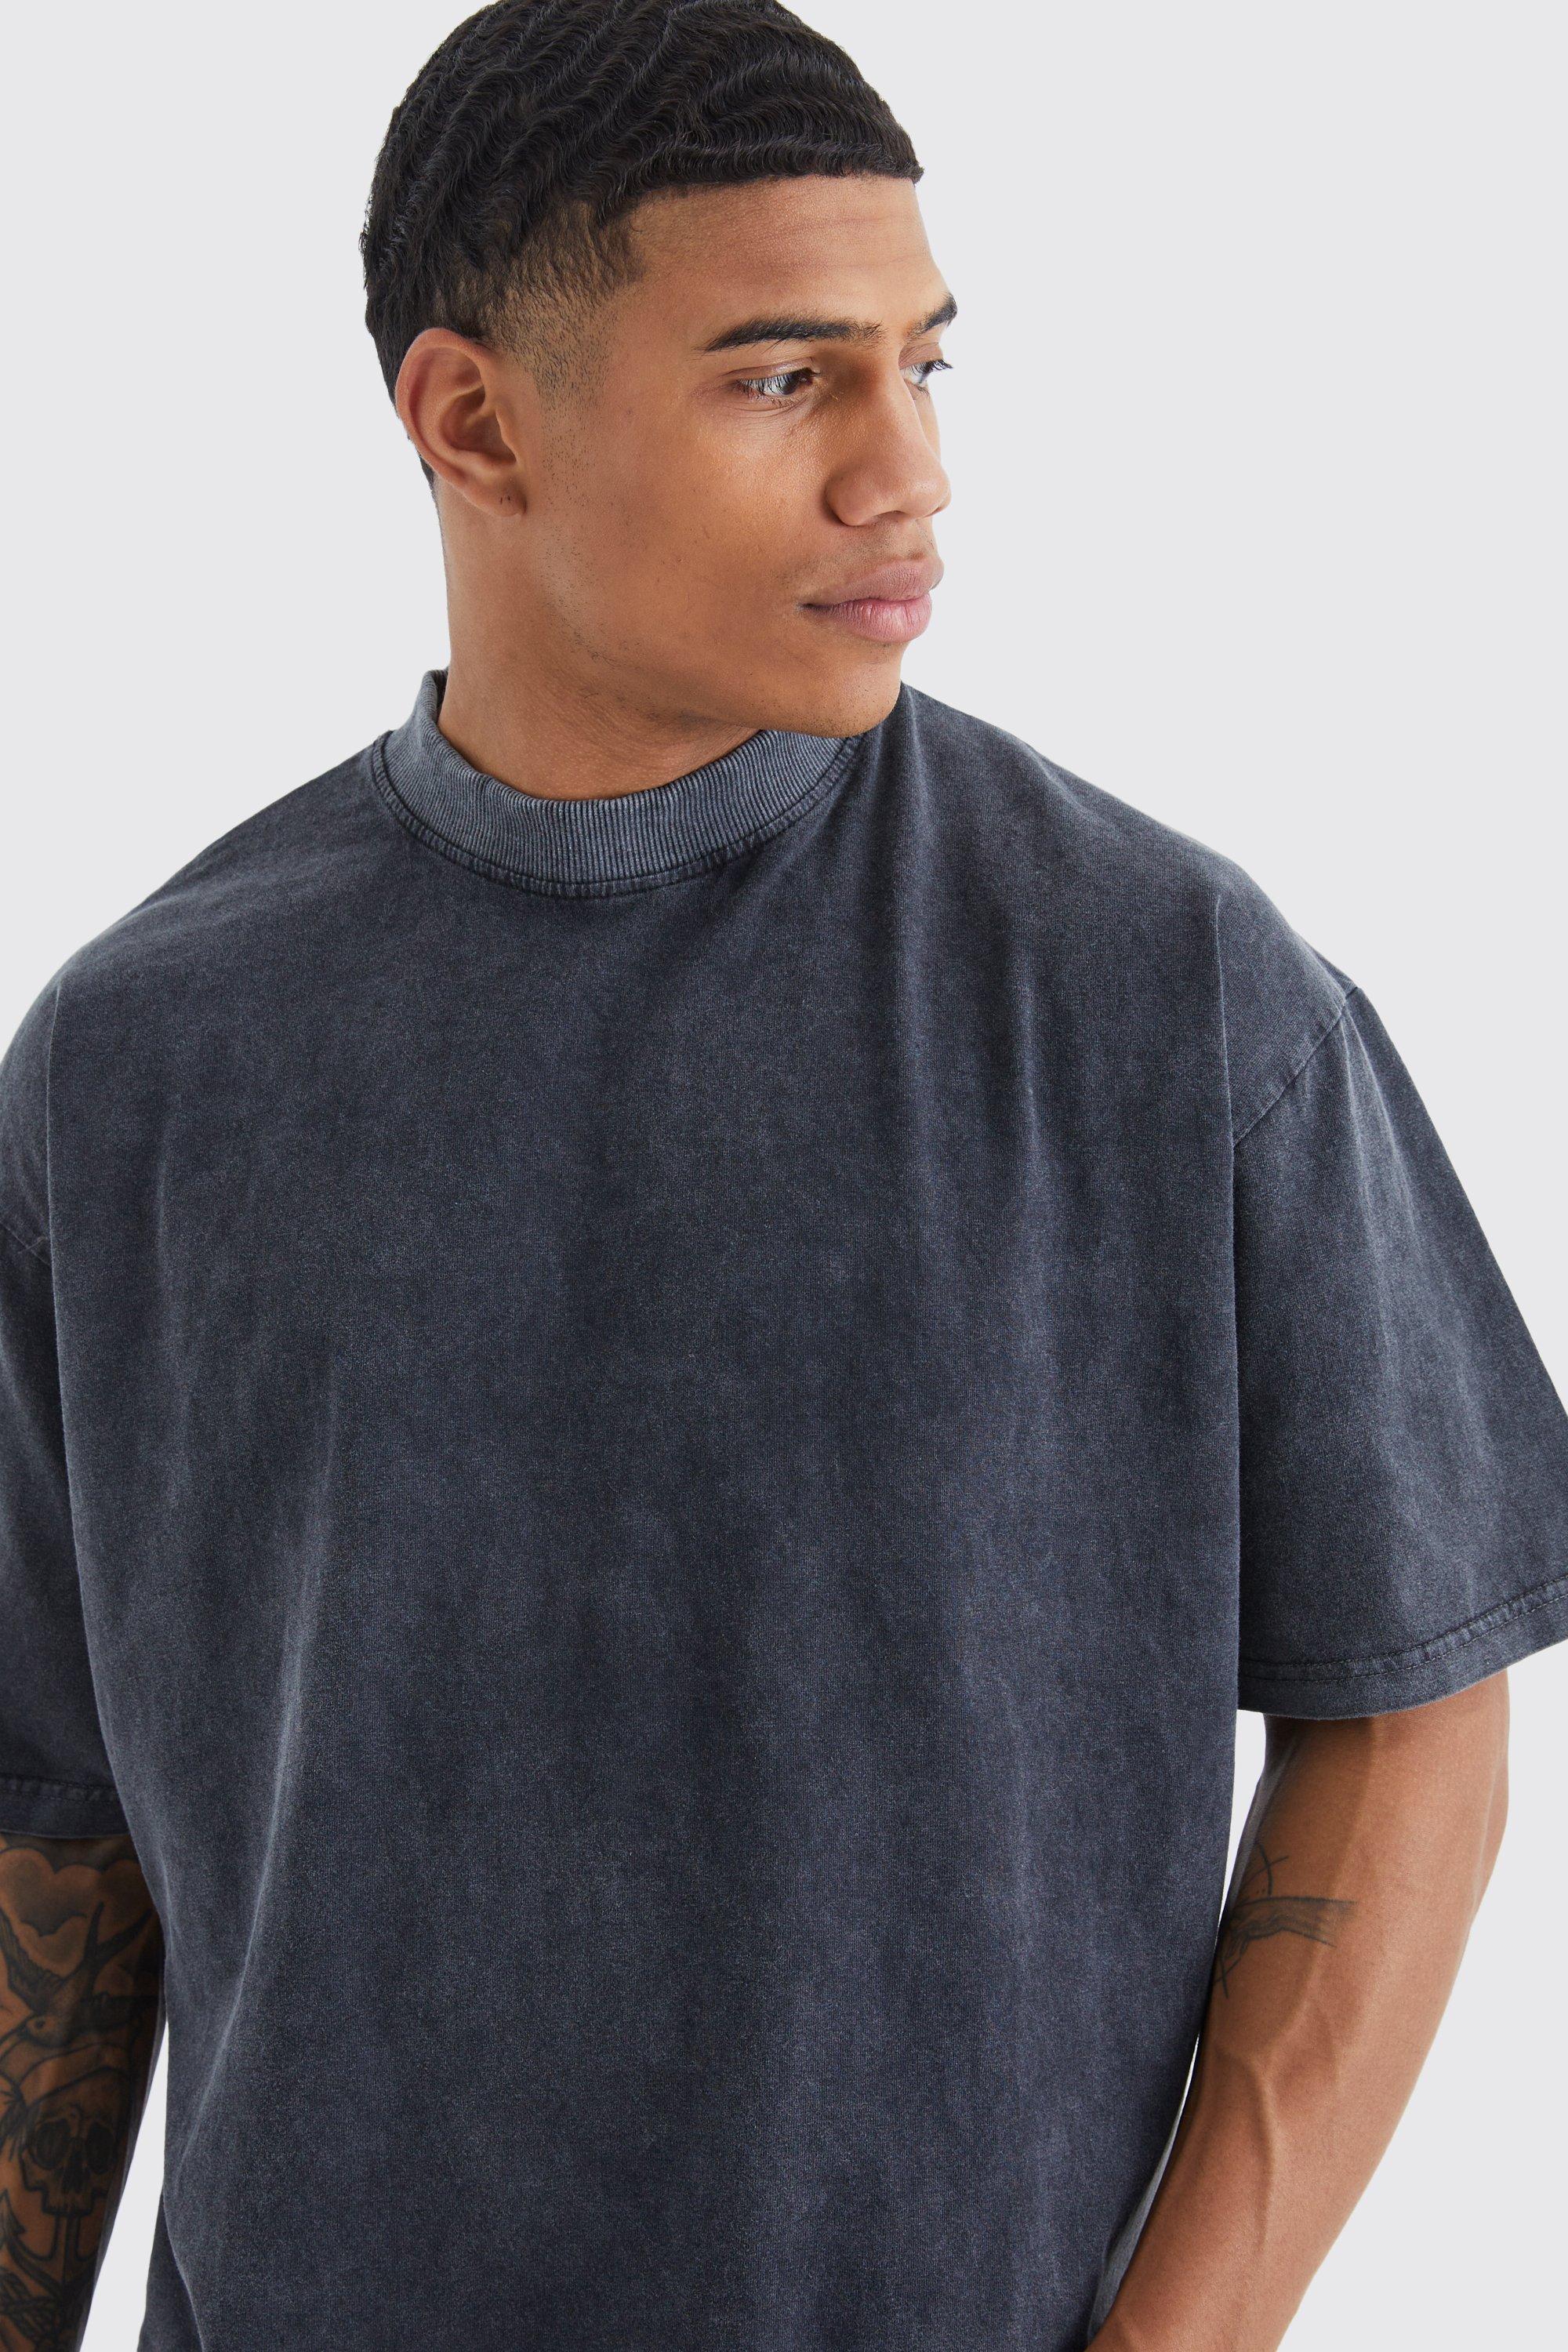 ASOS DESIGN oversized heavyweight t-shirt in acid washed grey